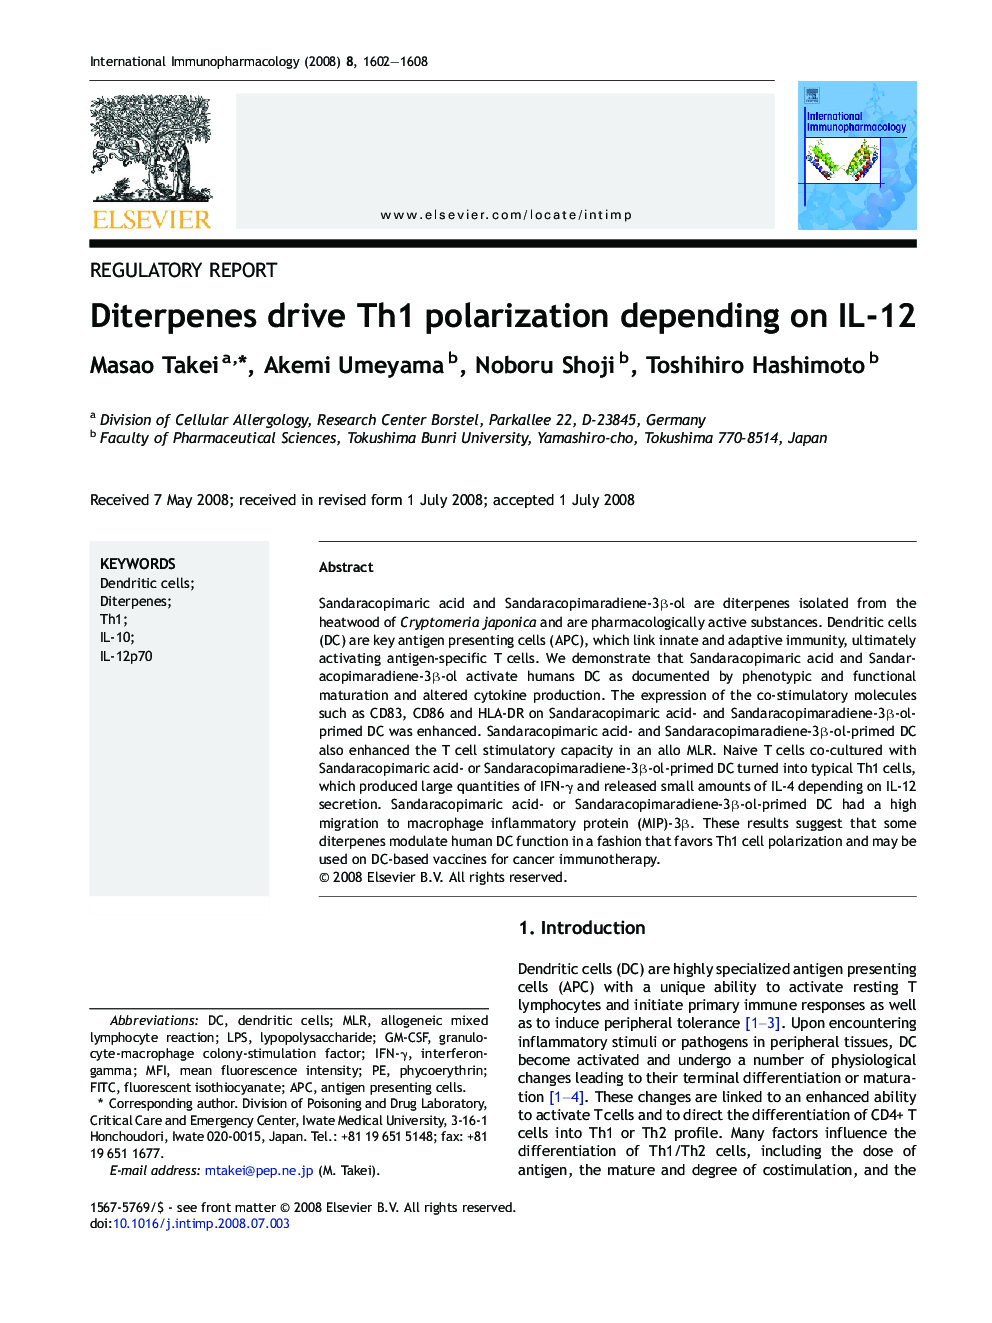 Diterpenes drive Th1 polarization depending on IL-12